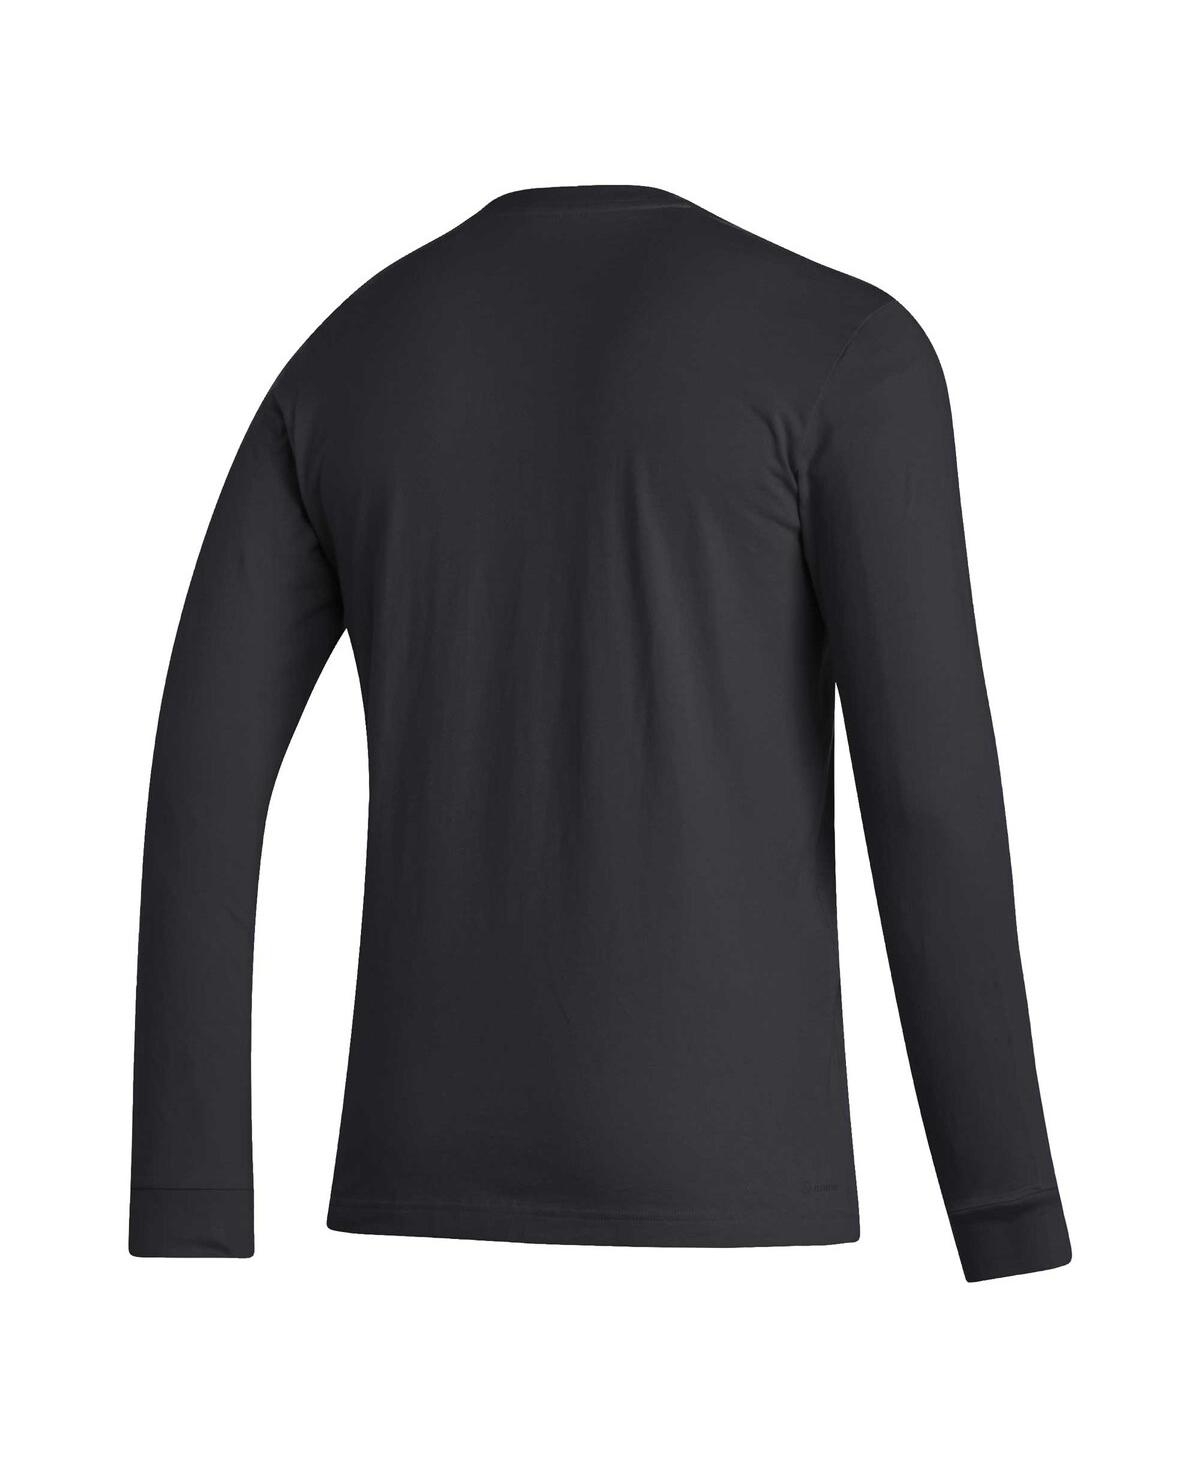 Shop Adidas Originals Men's Adidas Black Alabama State Hornets Honoring Black Excellence Long Sleeve T-shirt